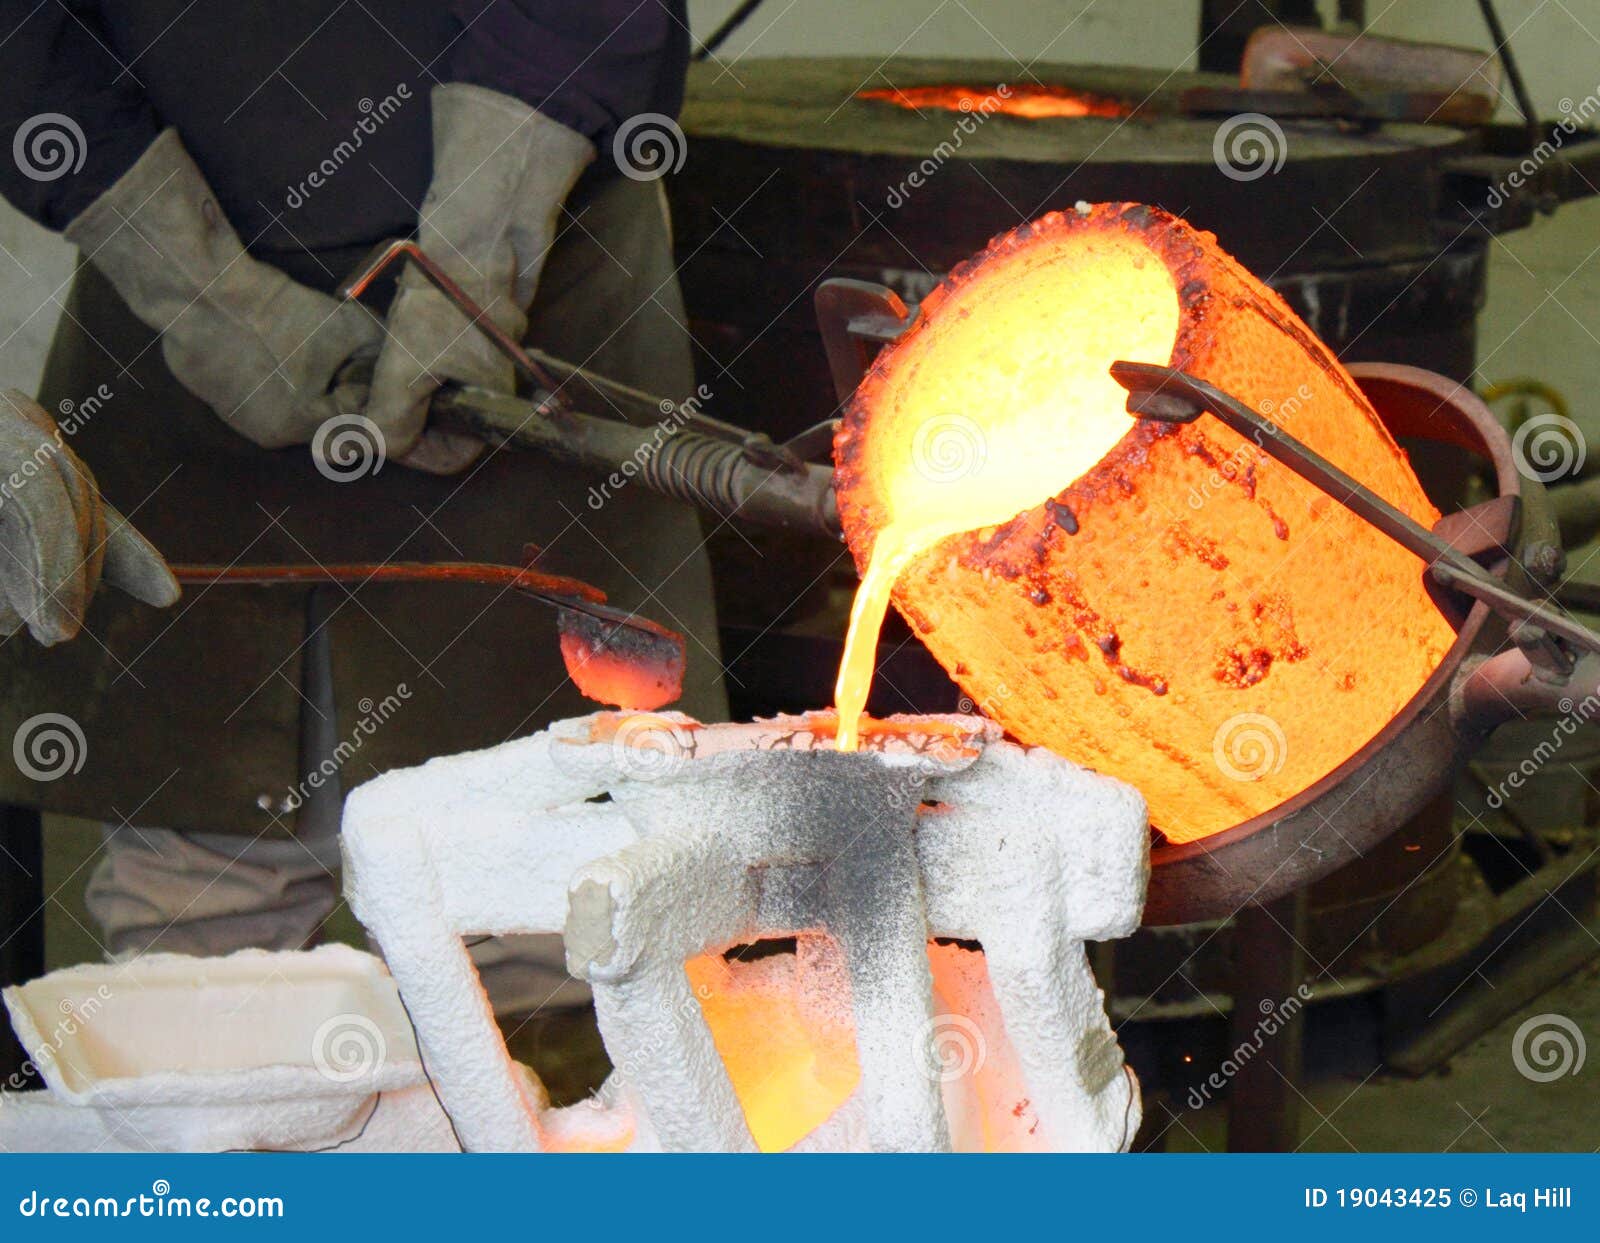 foundry molten metal pour